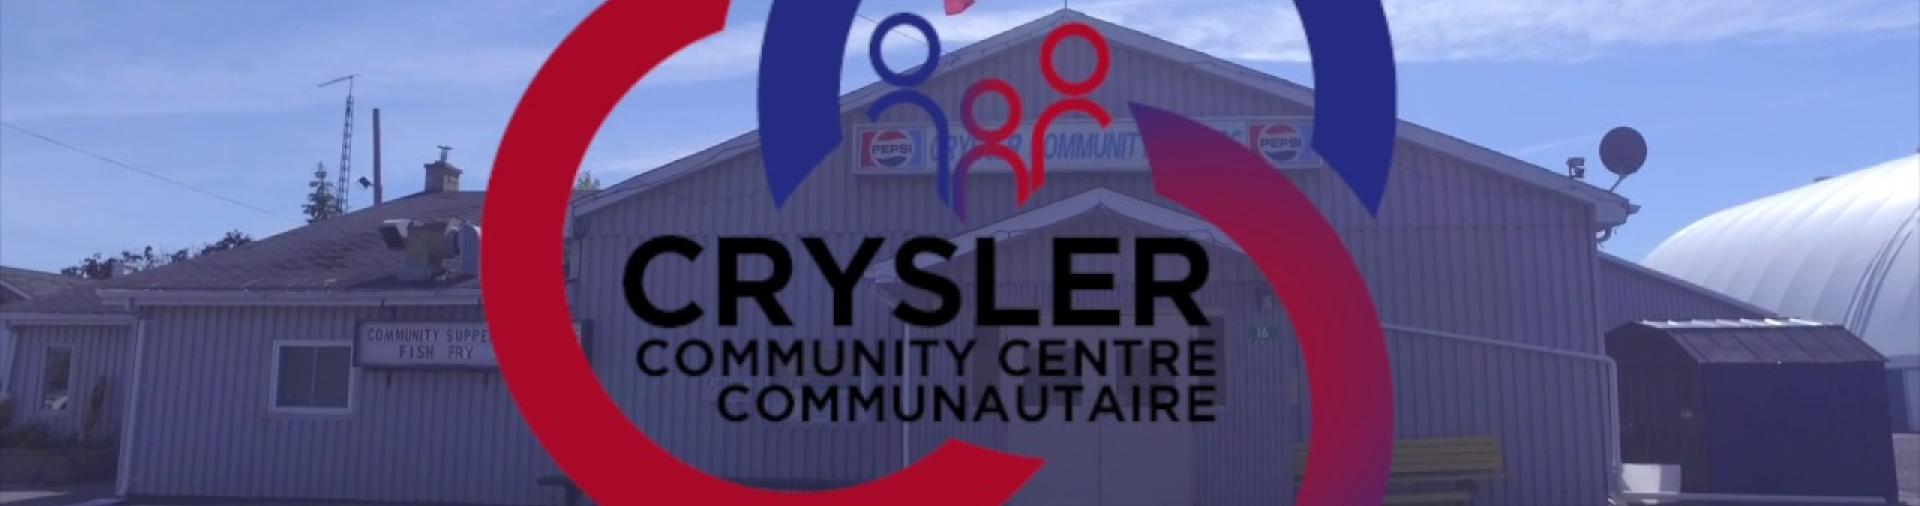 Crysler Community Centre